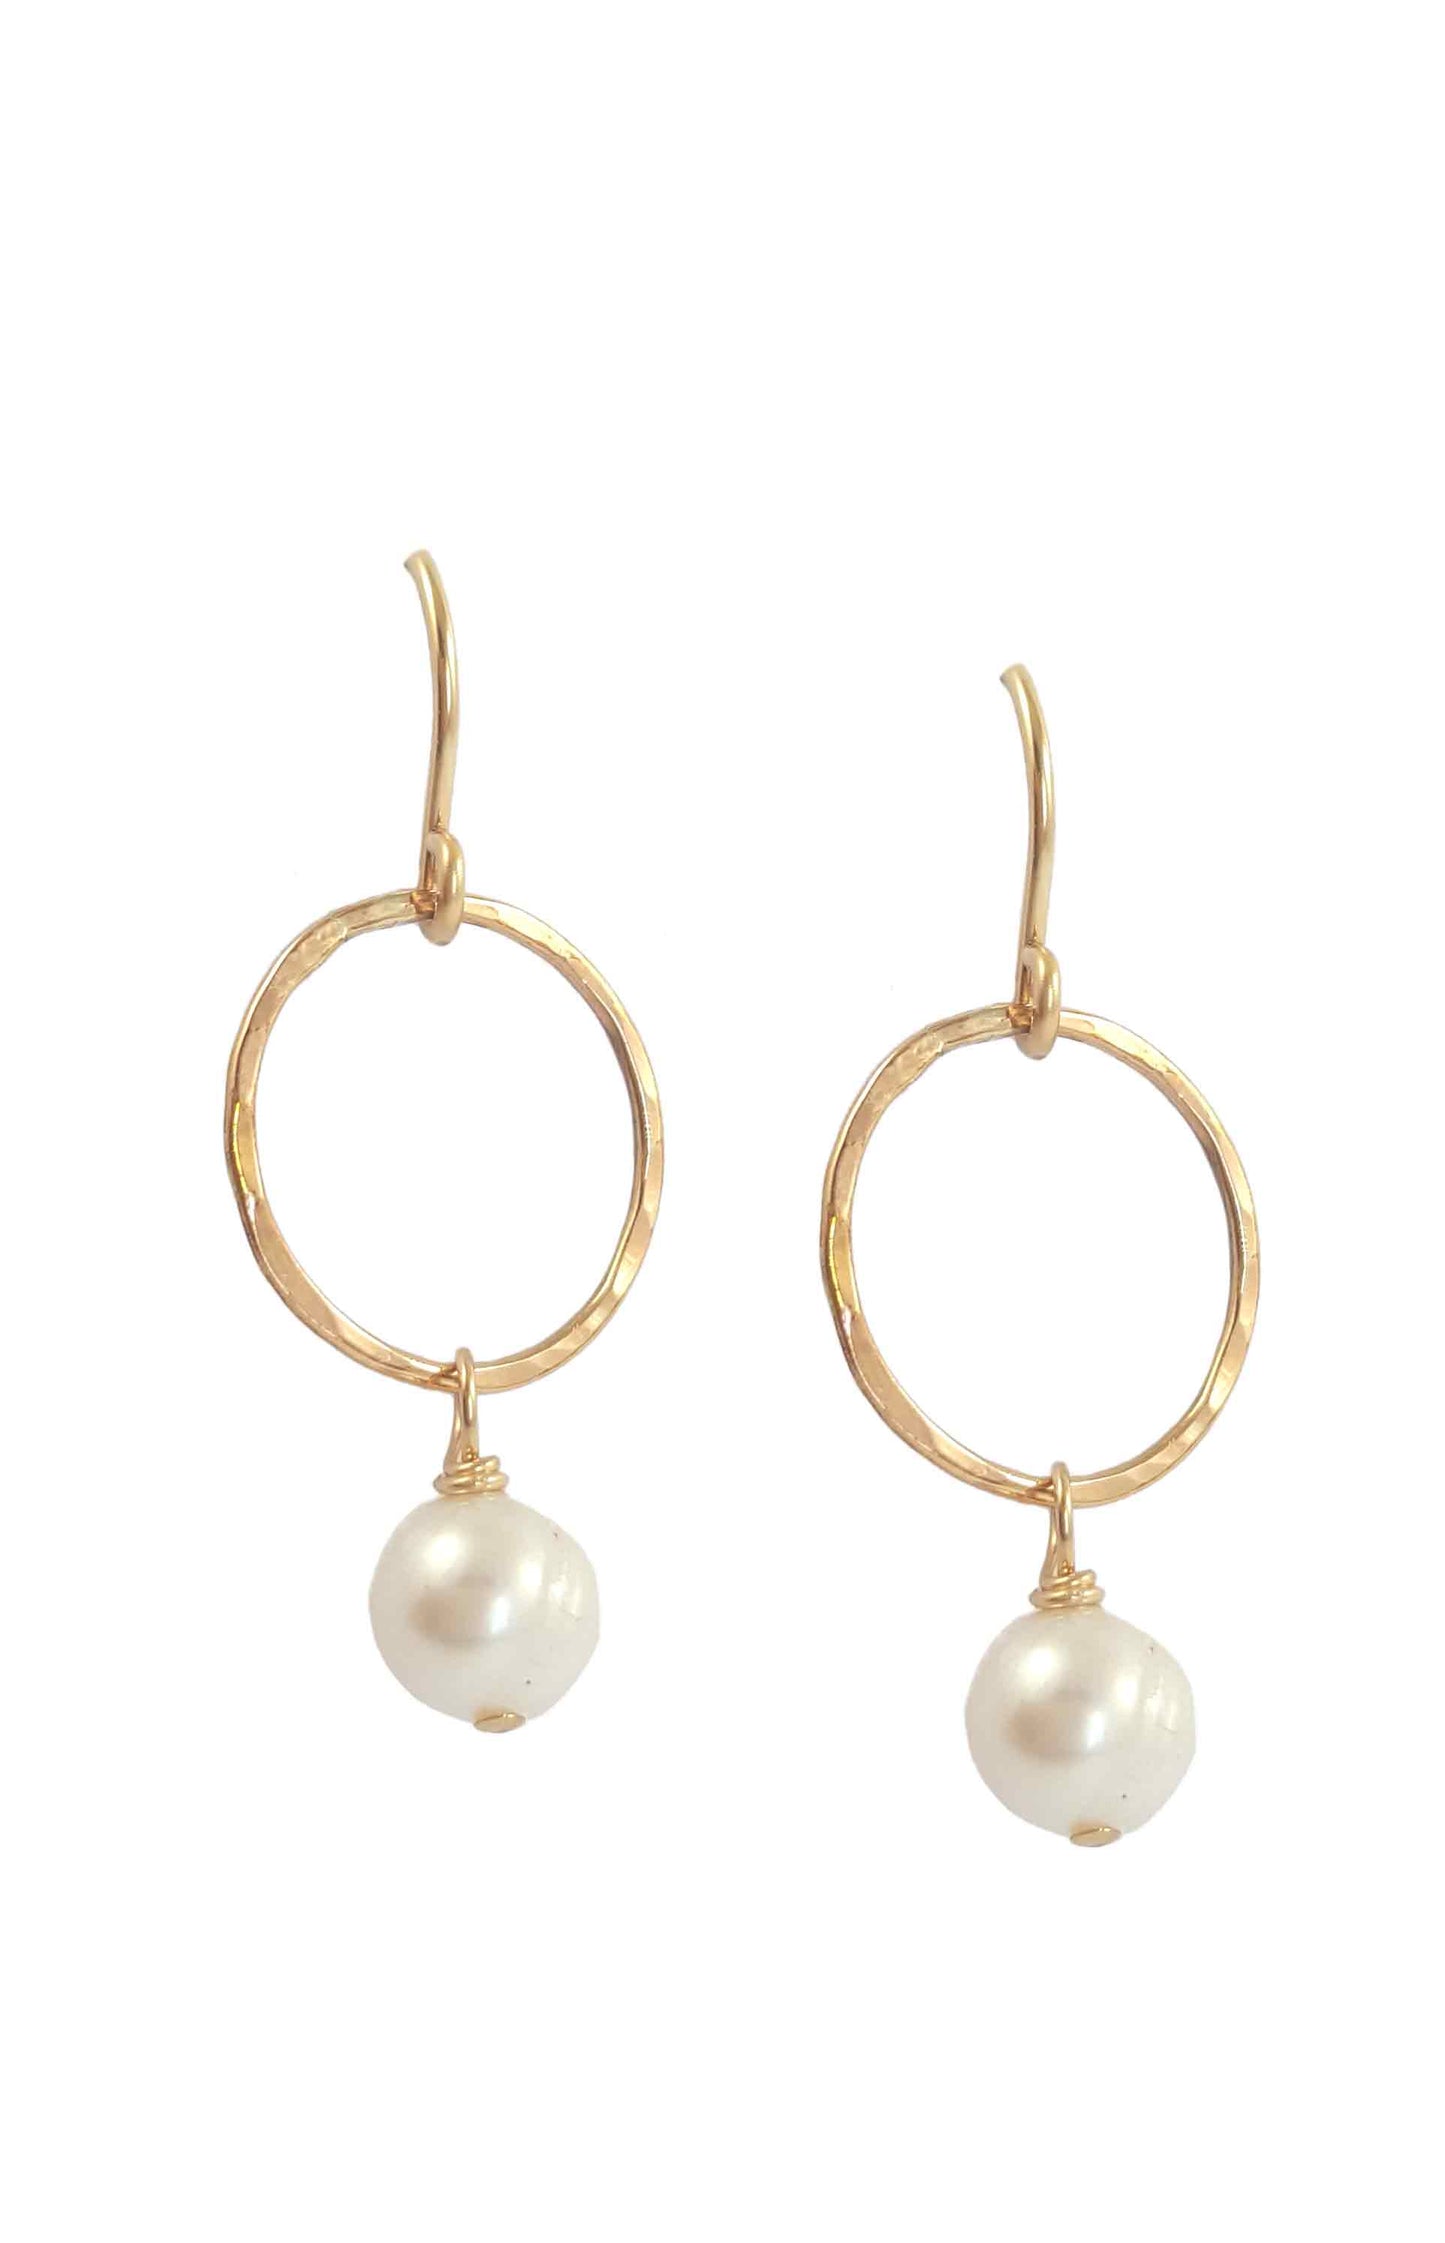 O pearl hoop earrings | Coco elegance collection - Summer Gems